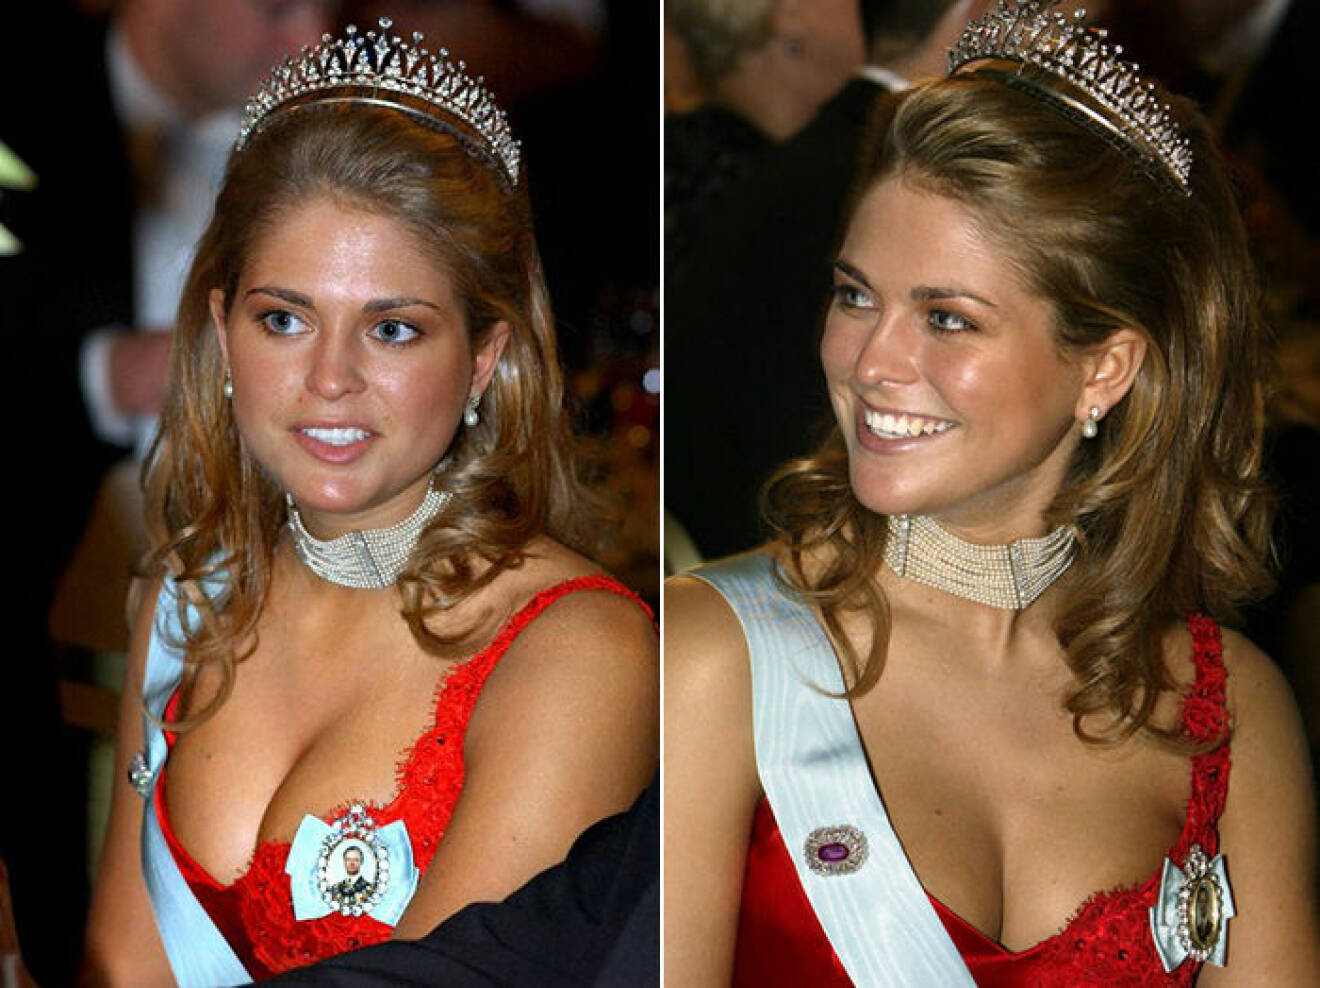 Prinsessan Madeleines urringning på Nobelfesten 2002 blev en snackis